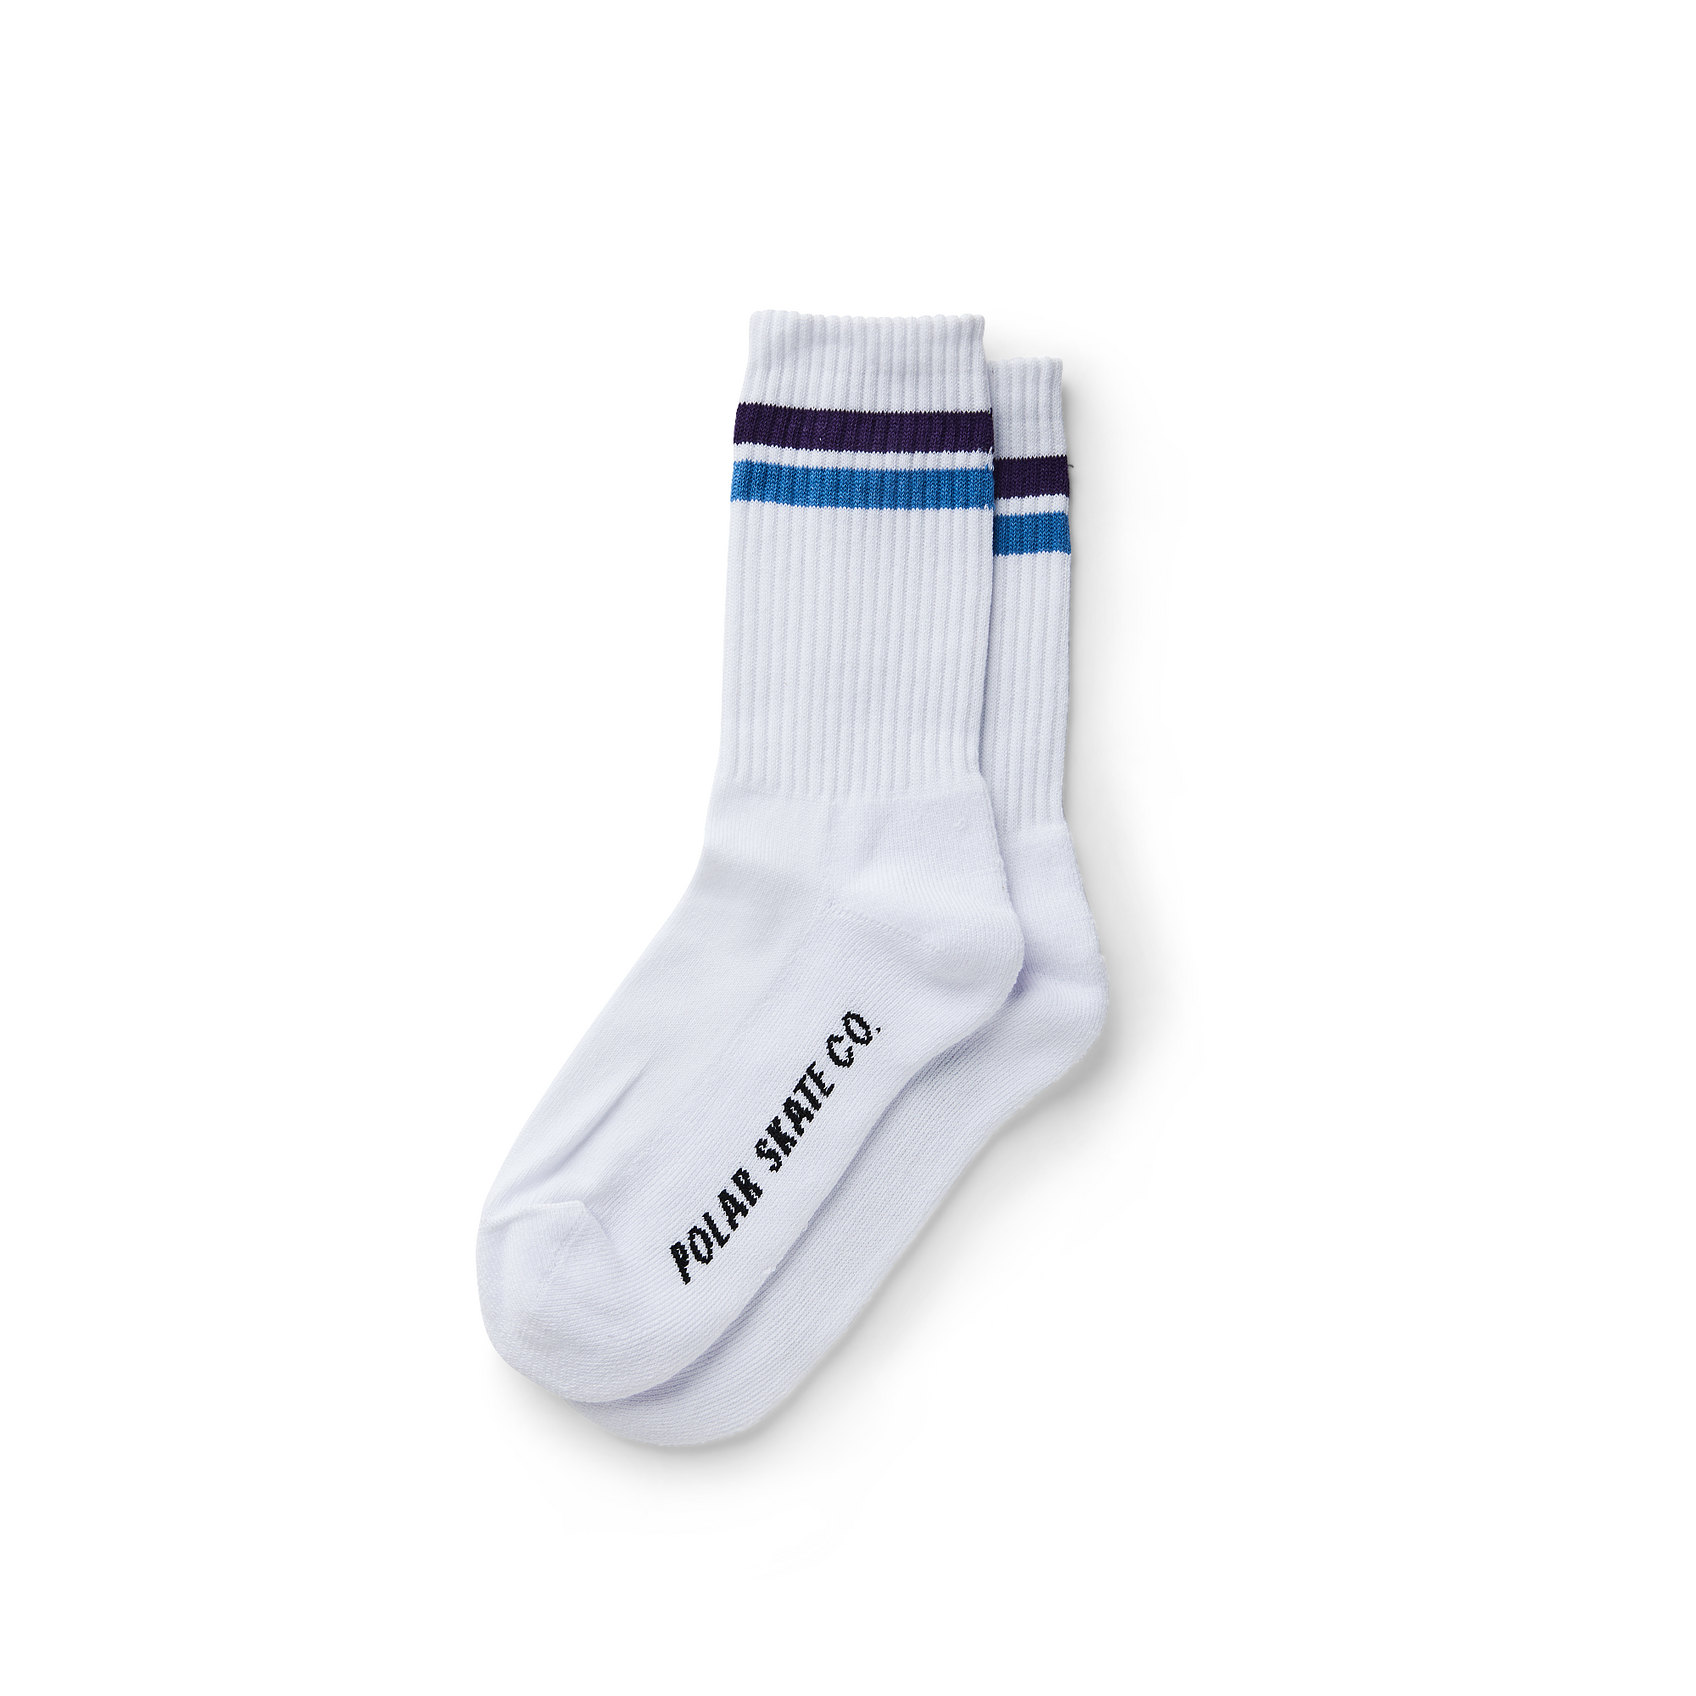 Polar Skate Co. Stripe Socks (White/Purple/Blue) - Apple Valley Emporium